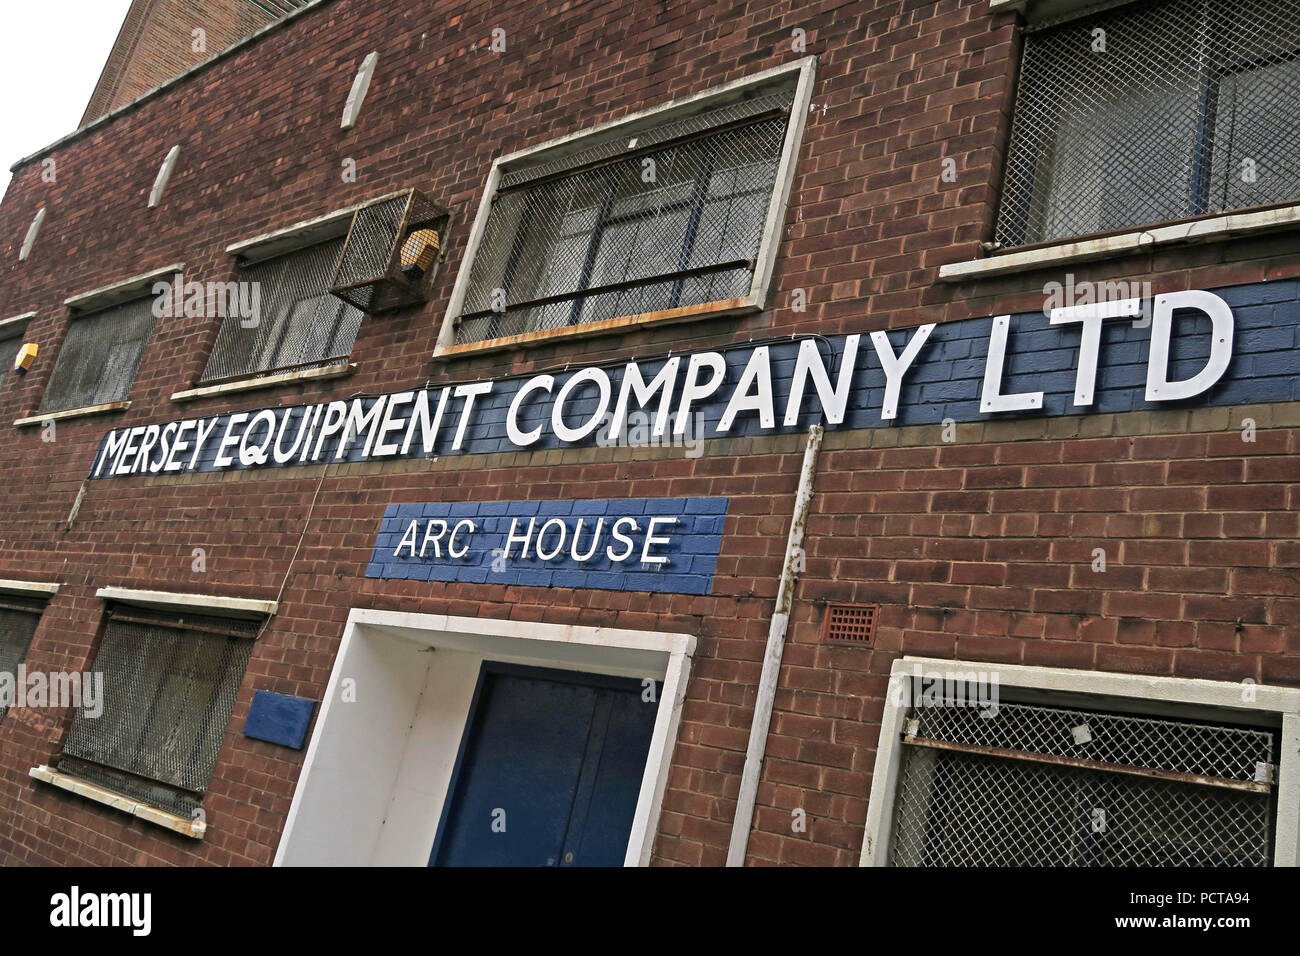 Maison de l'Arc, Mersey Equipment Company Ltd, Arc House, Birkenhead, Wirral, Merseyside, North West England, UK Banque D'Images